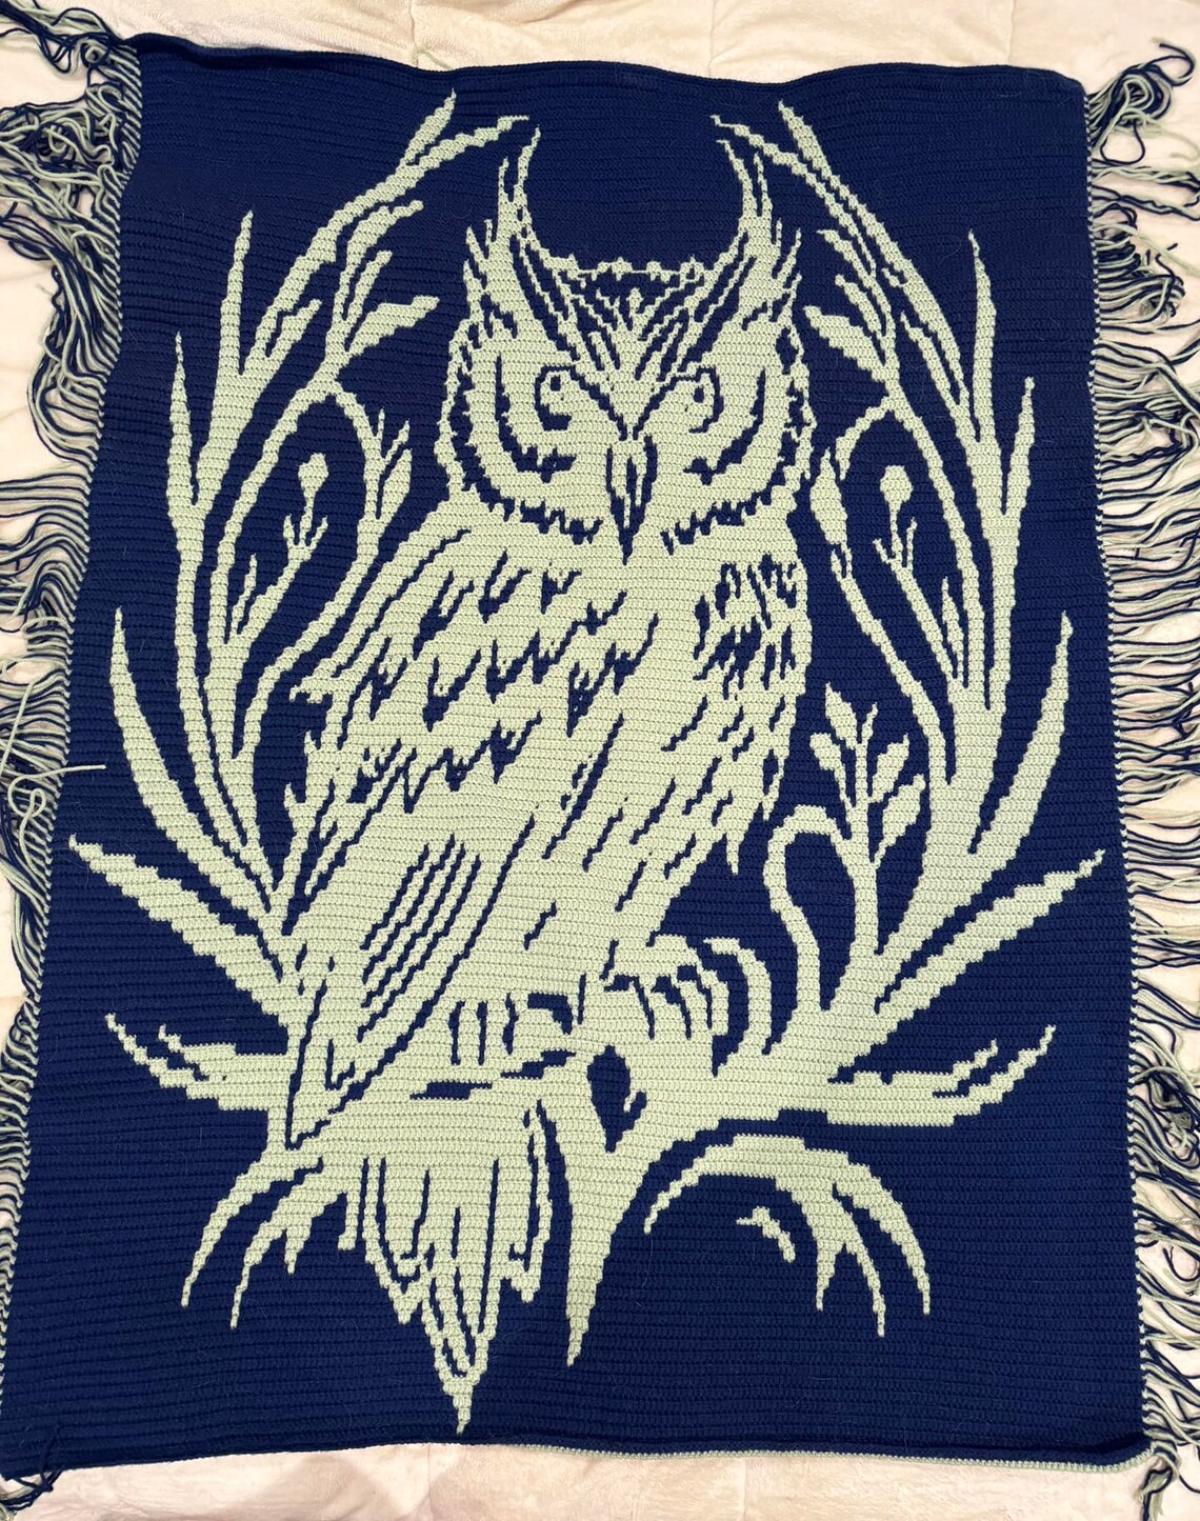 Ever Watchful Owl Overlay Mosaic Crochet Blanket